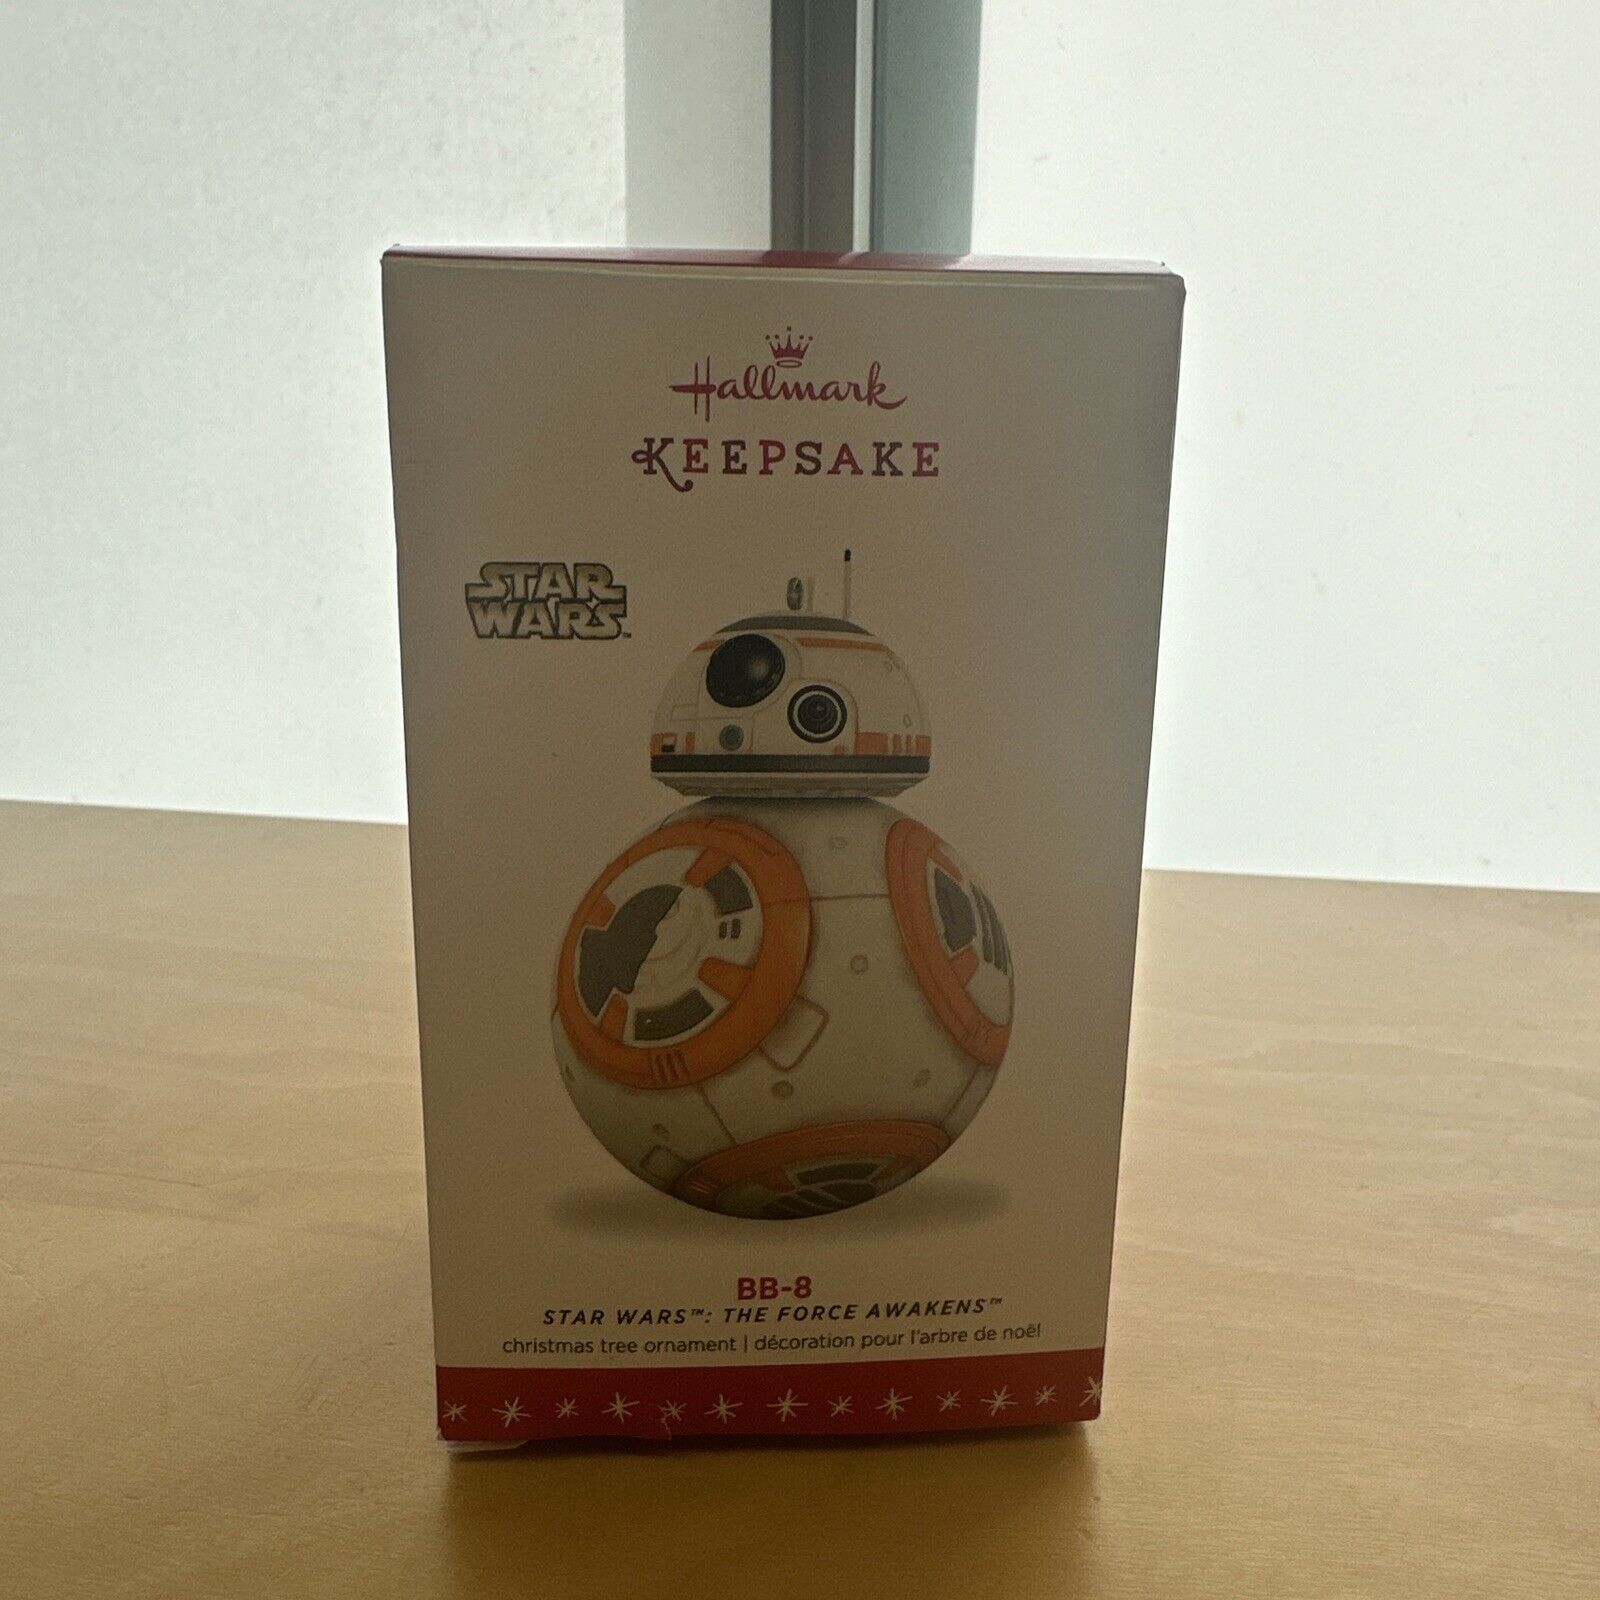 2016 Hallmark Keepsake Star Wars Force Awakens BB-8 BB8 Christmas Ornament NEW